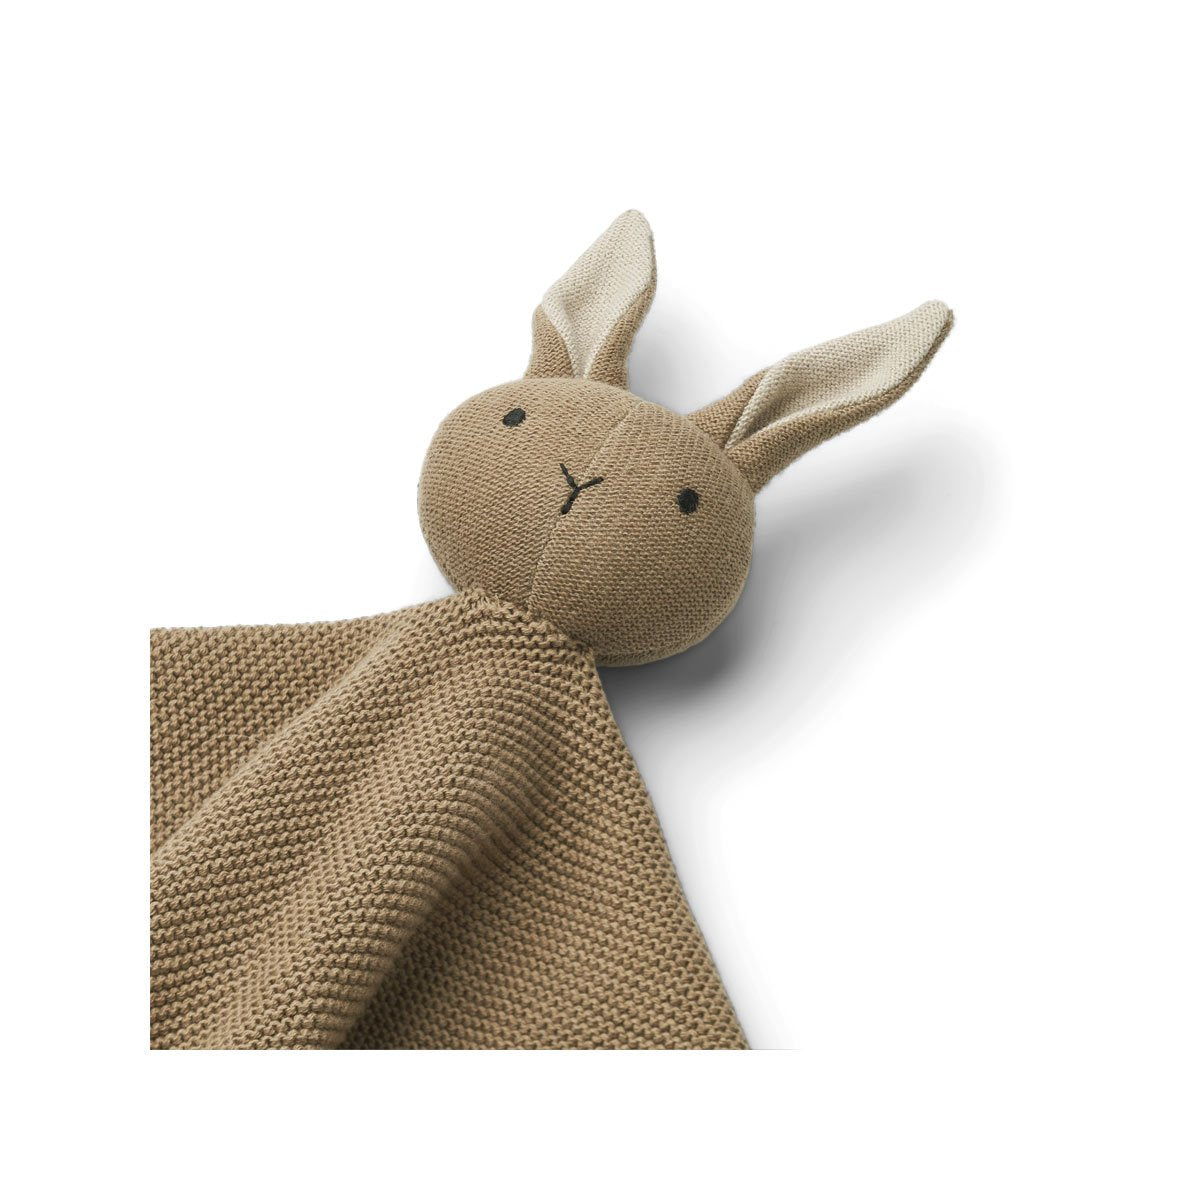 Liewood Milo Knit Cuddle Cloth - Rabbit Oat